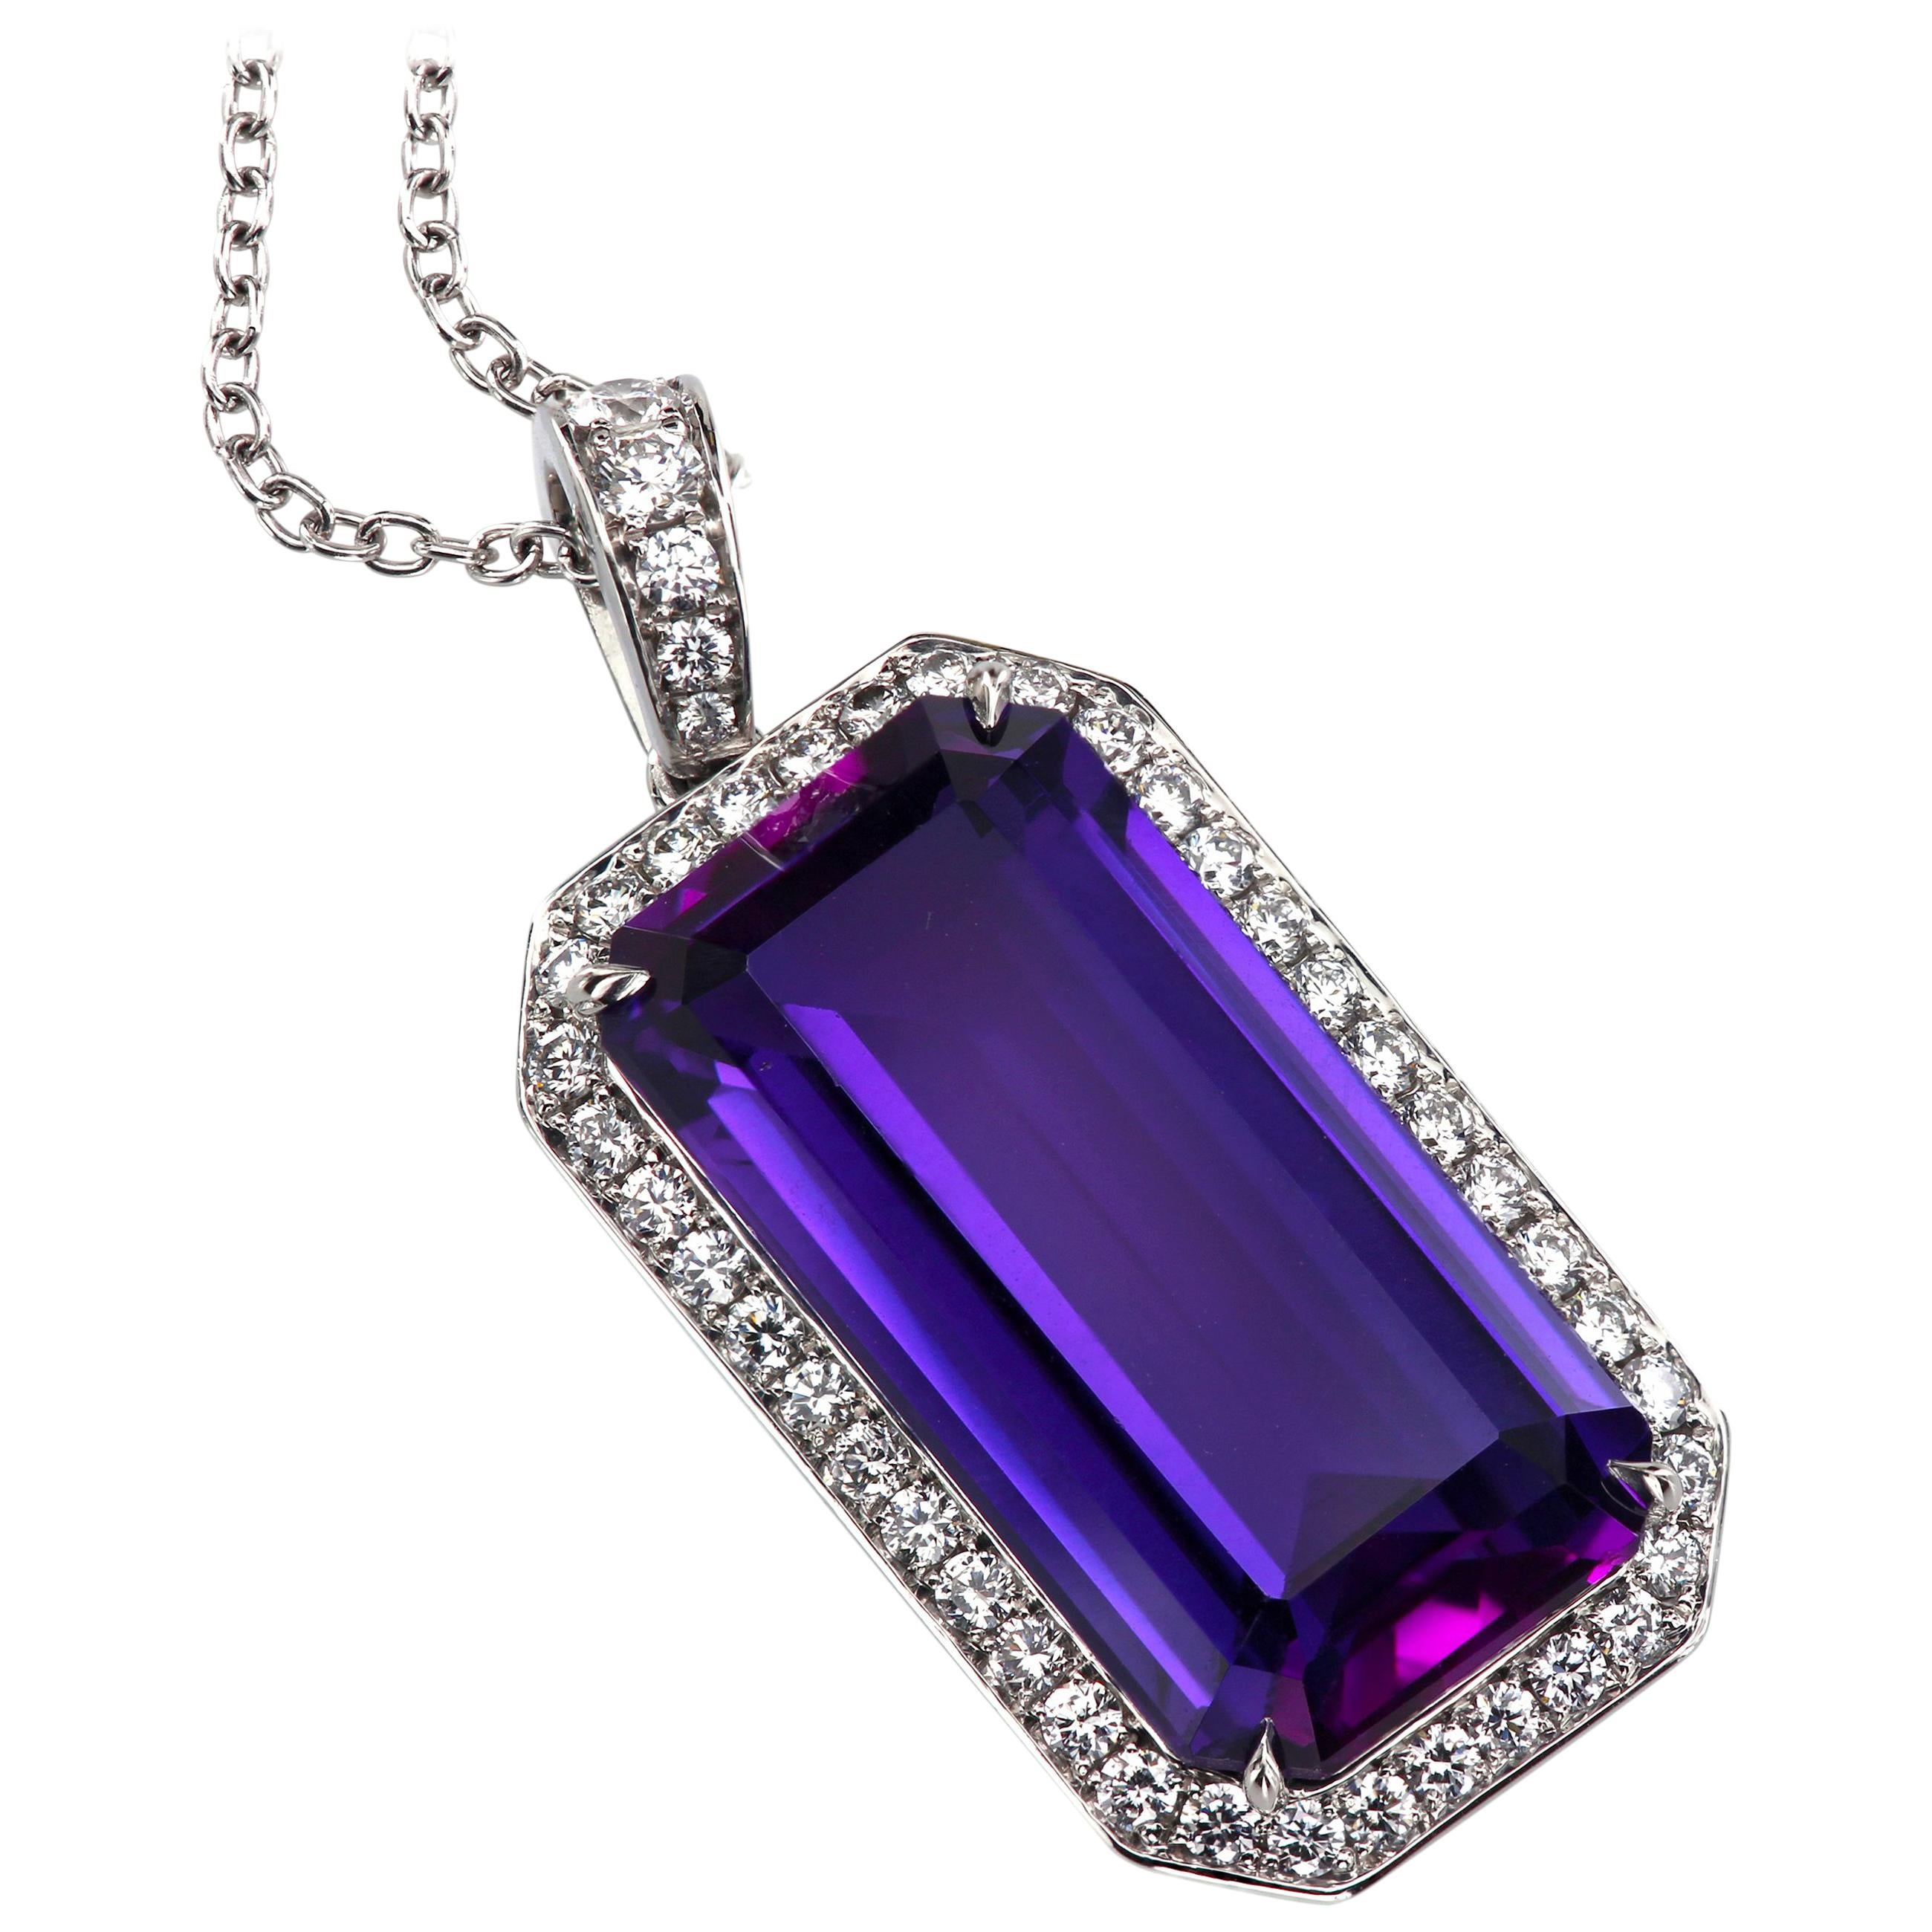 Leon Mege Rich Purple Amethyst Pendant in Platinum With Diamond Pave